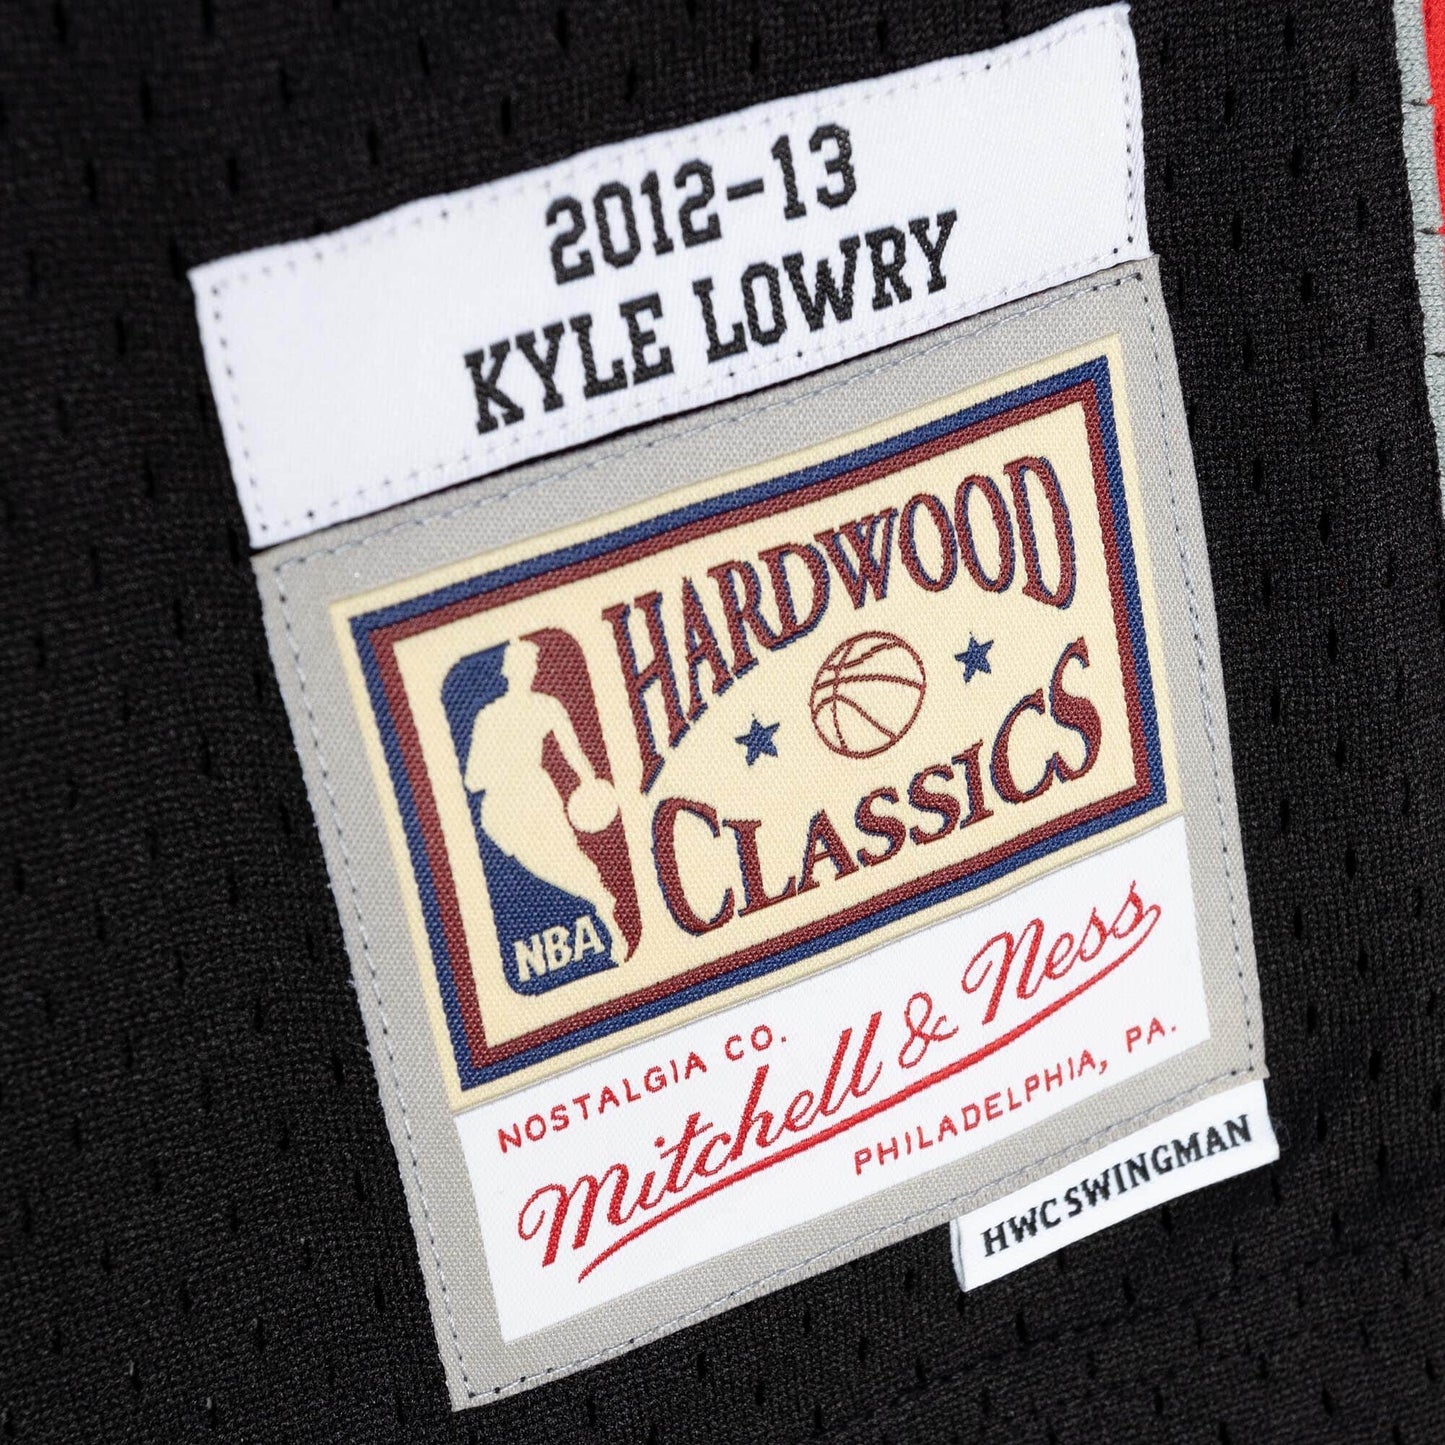 NBA Swingman Jersey Toronto Raptors 2012-13 Kyle Lowry